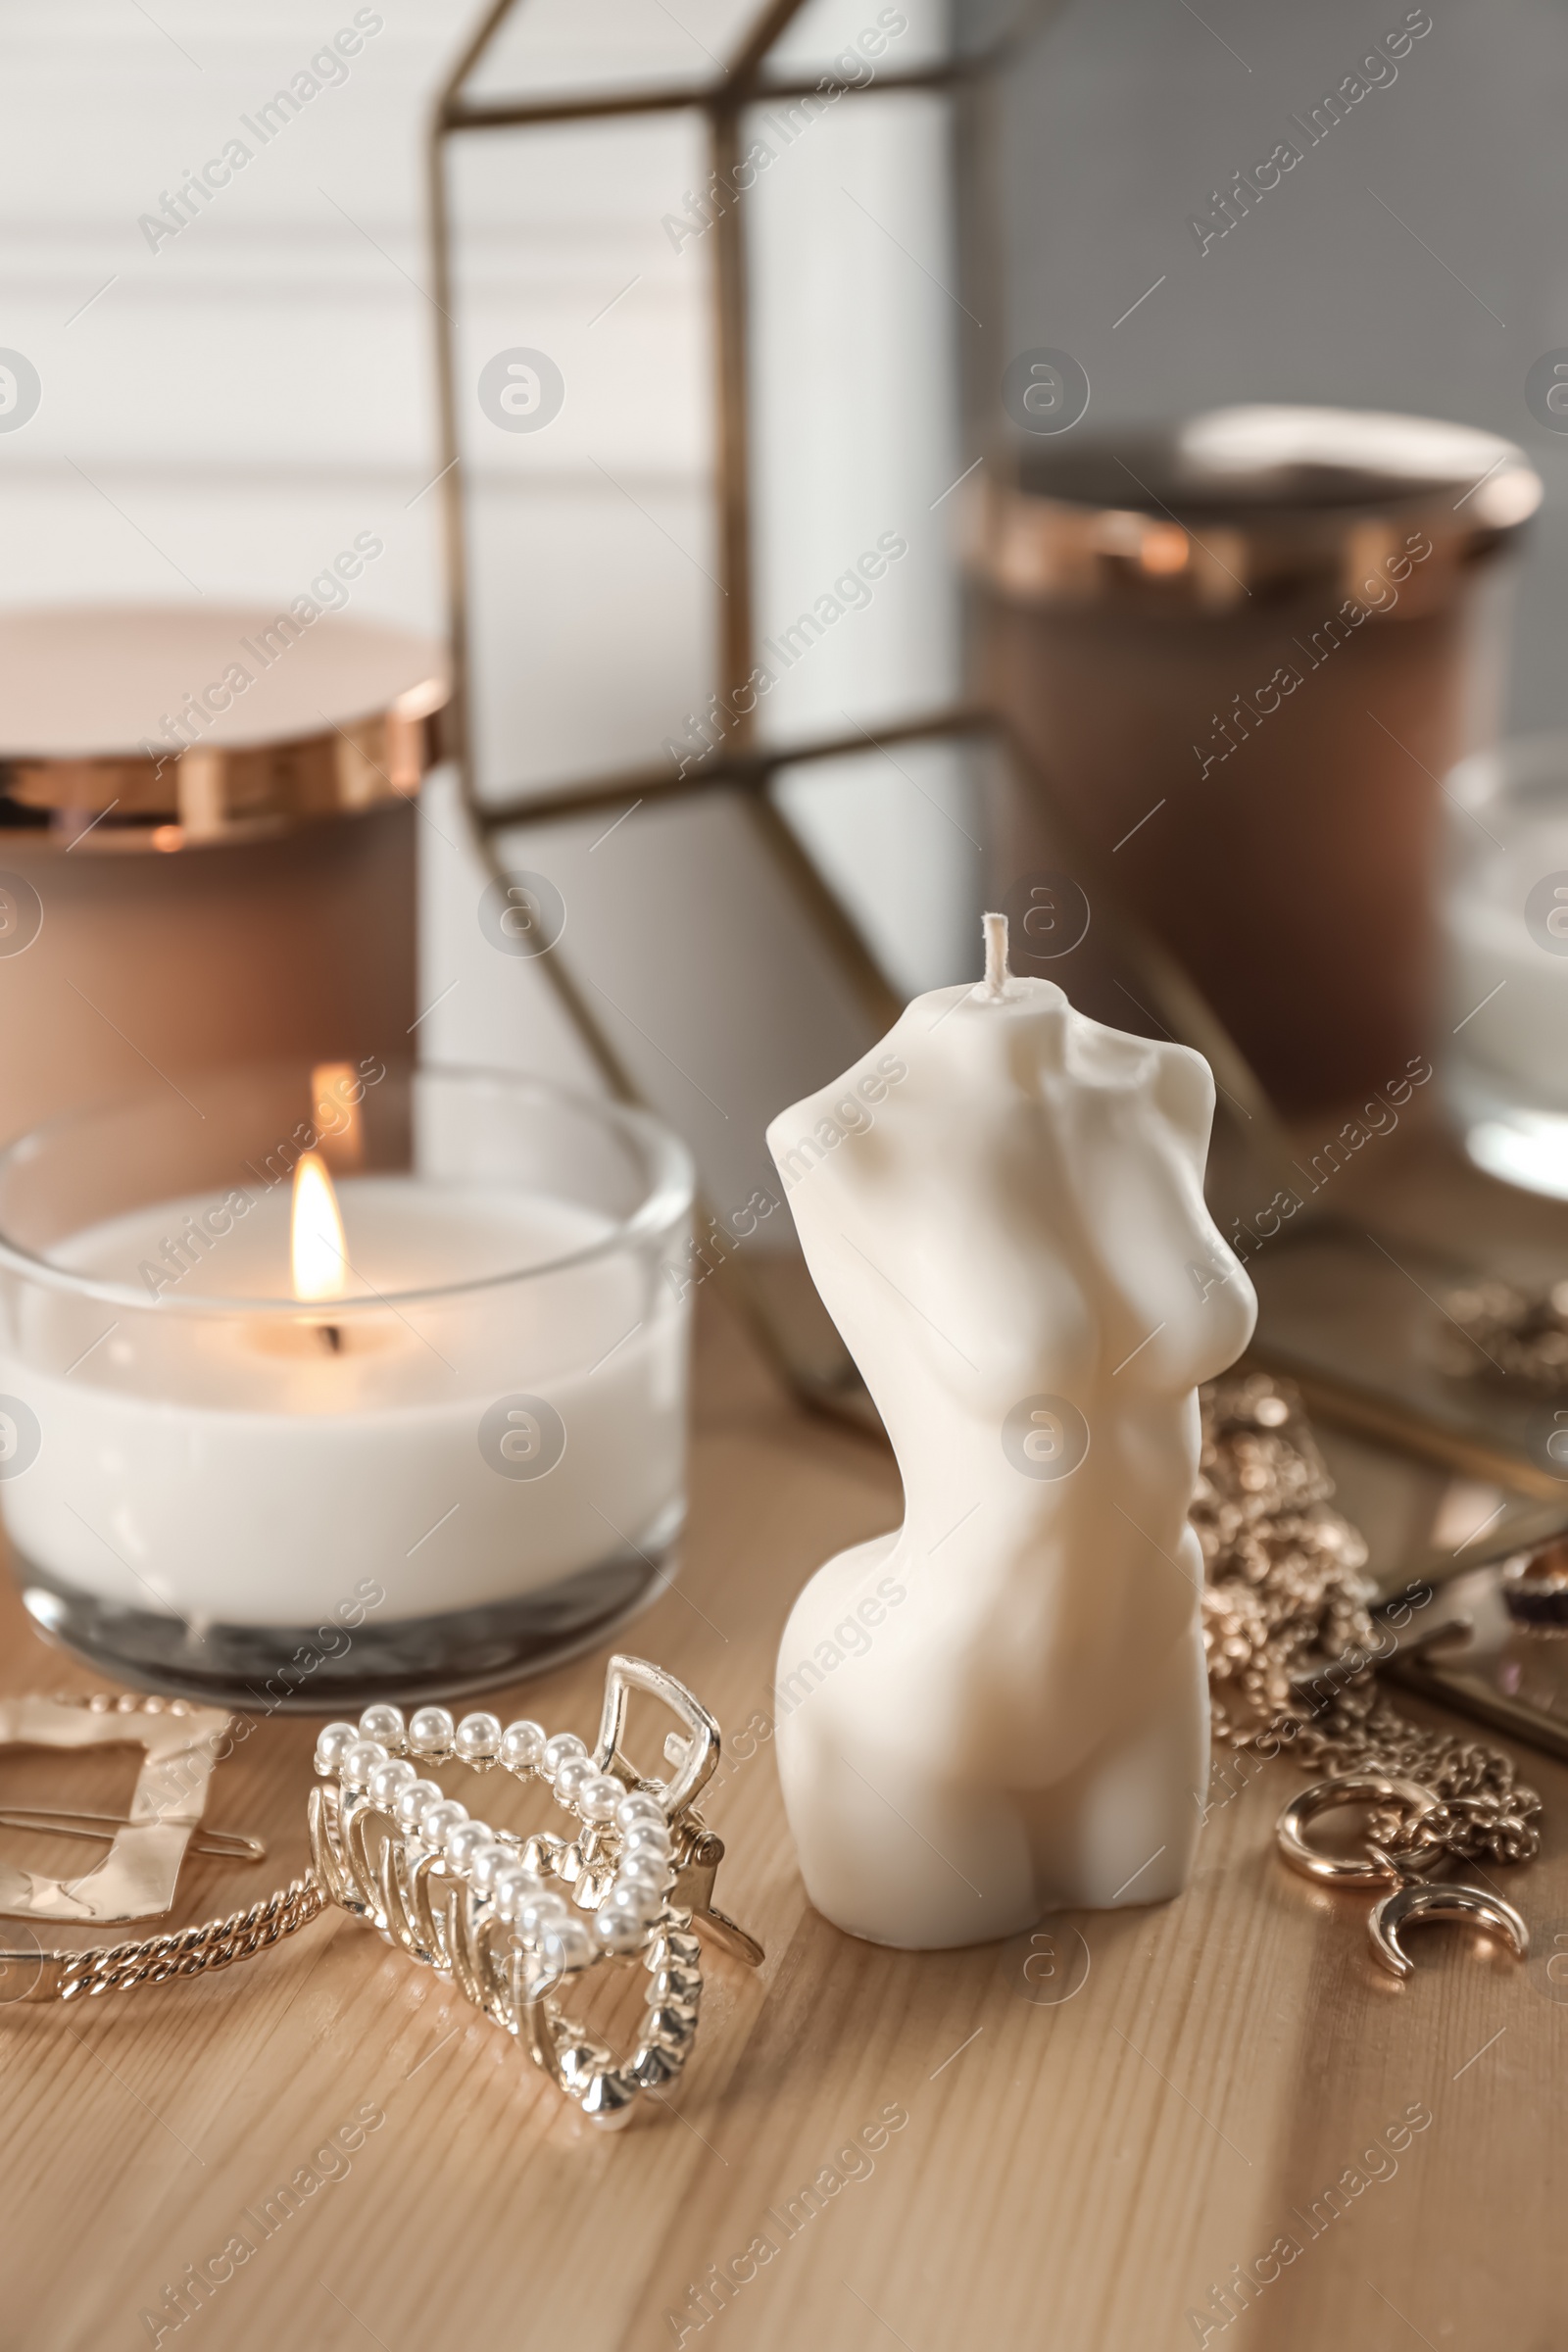 Photo of Beautiful female body shaped candle on wooden table. Stylish decor